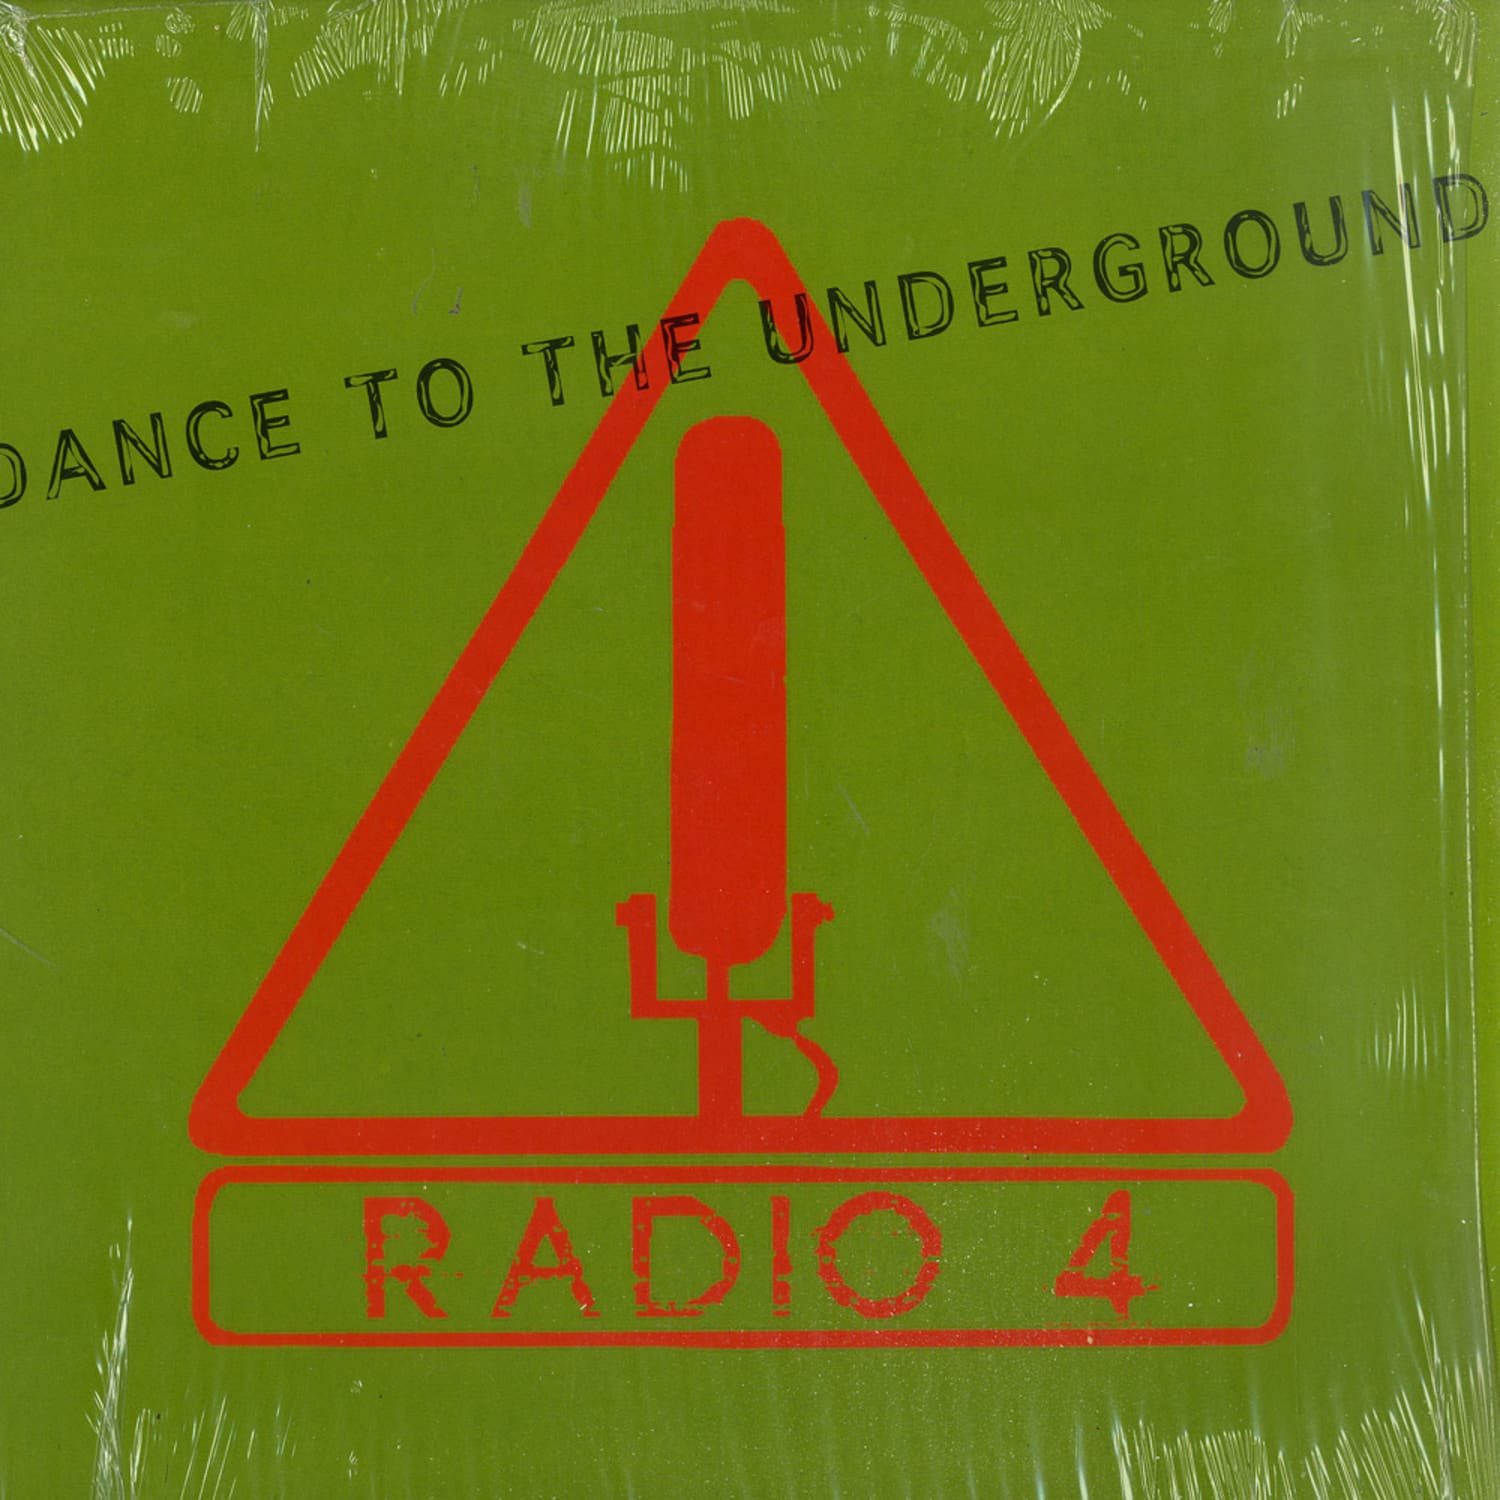 Radio 4 - DANCE TO THE UNDERGROUND